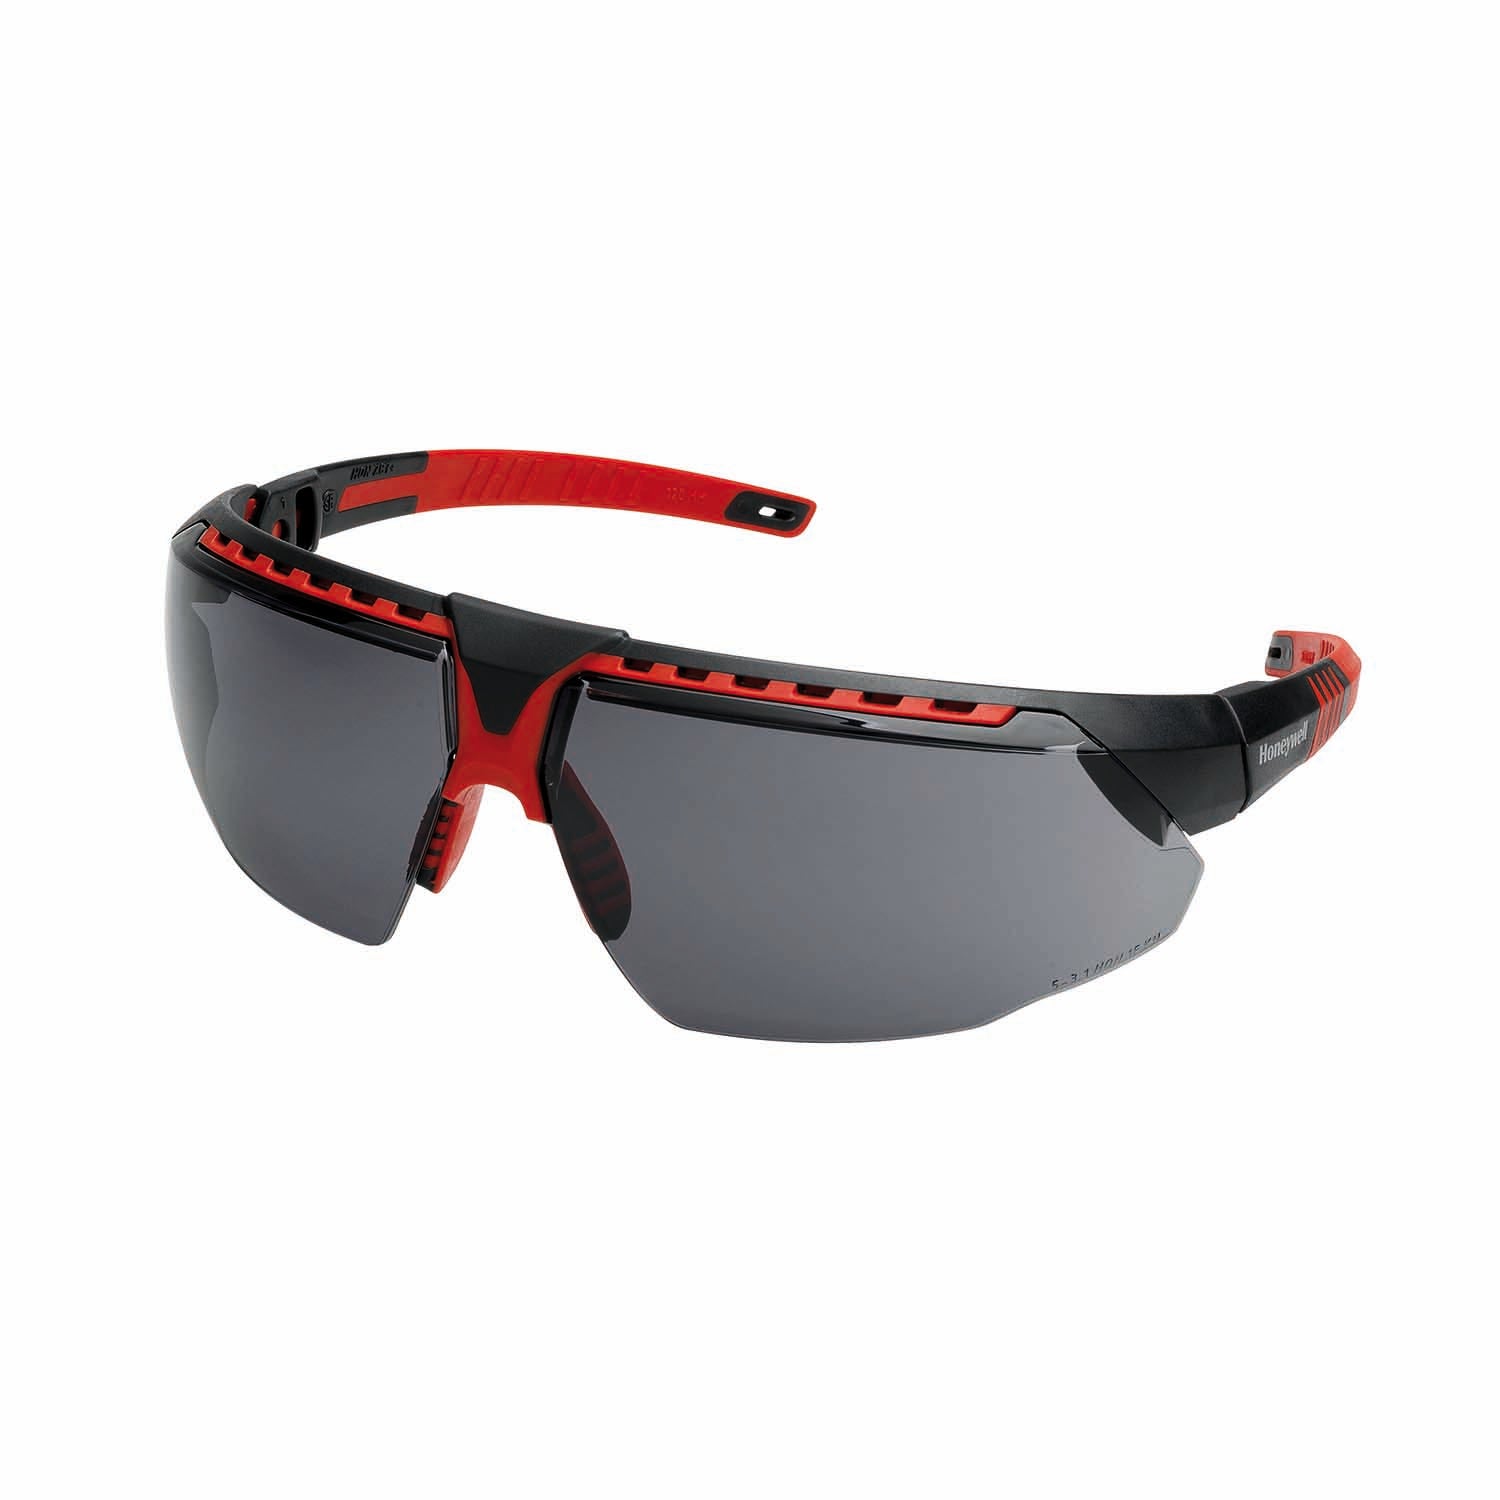 Honeywell 1034837 Safety Spectacles, AVATAR Safety Glasses Black/Red Frame Grey Lens